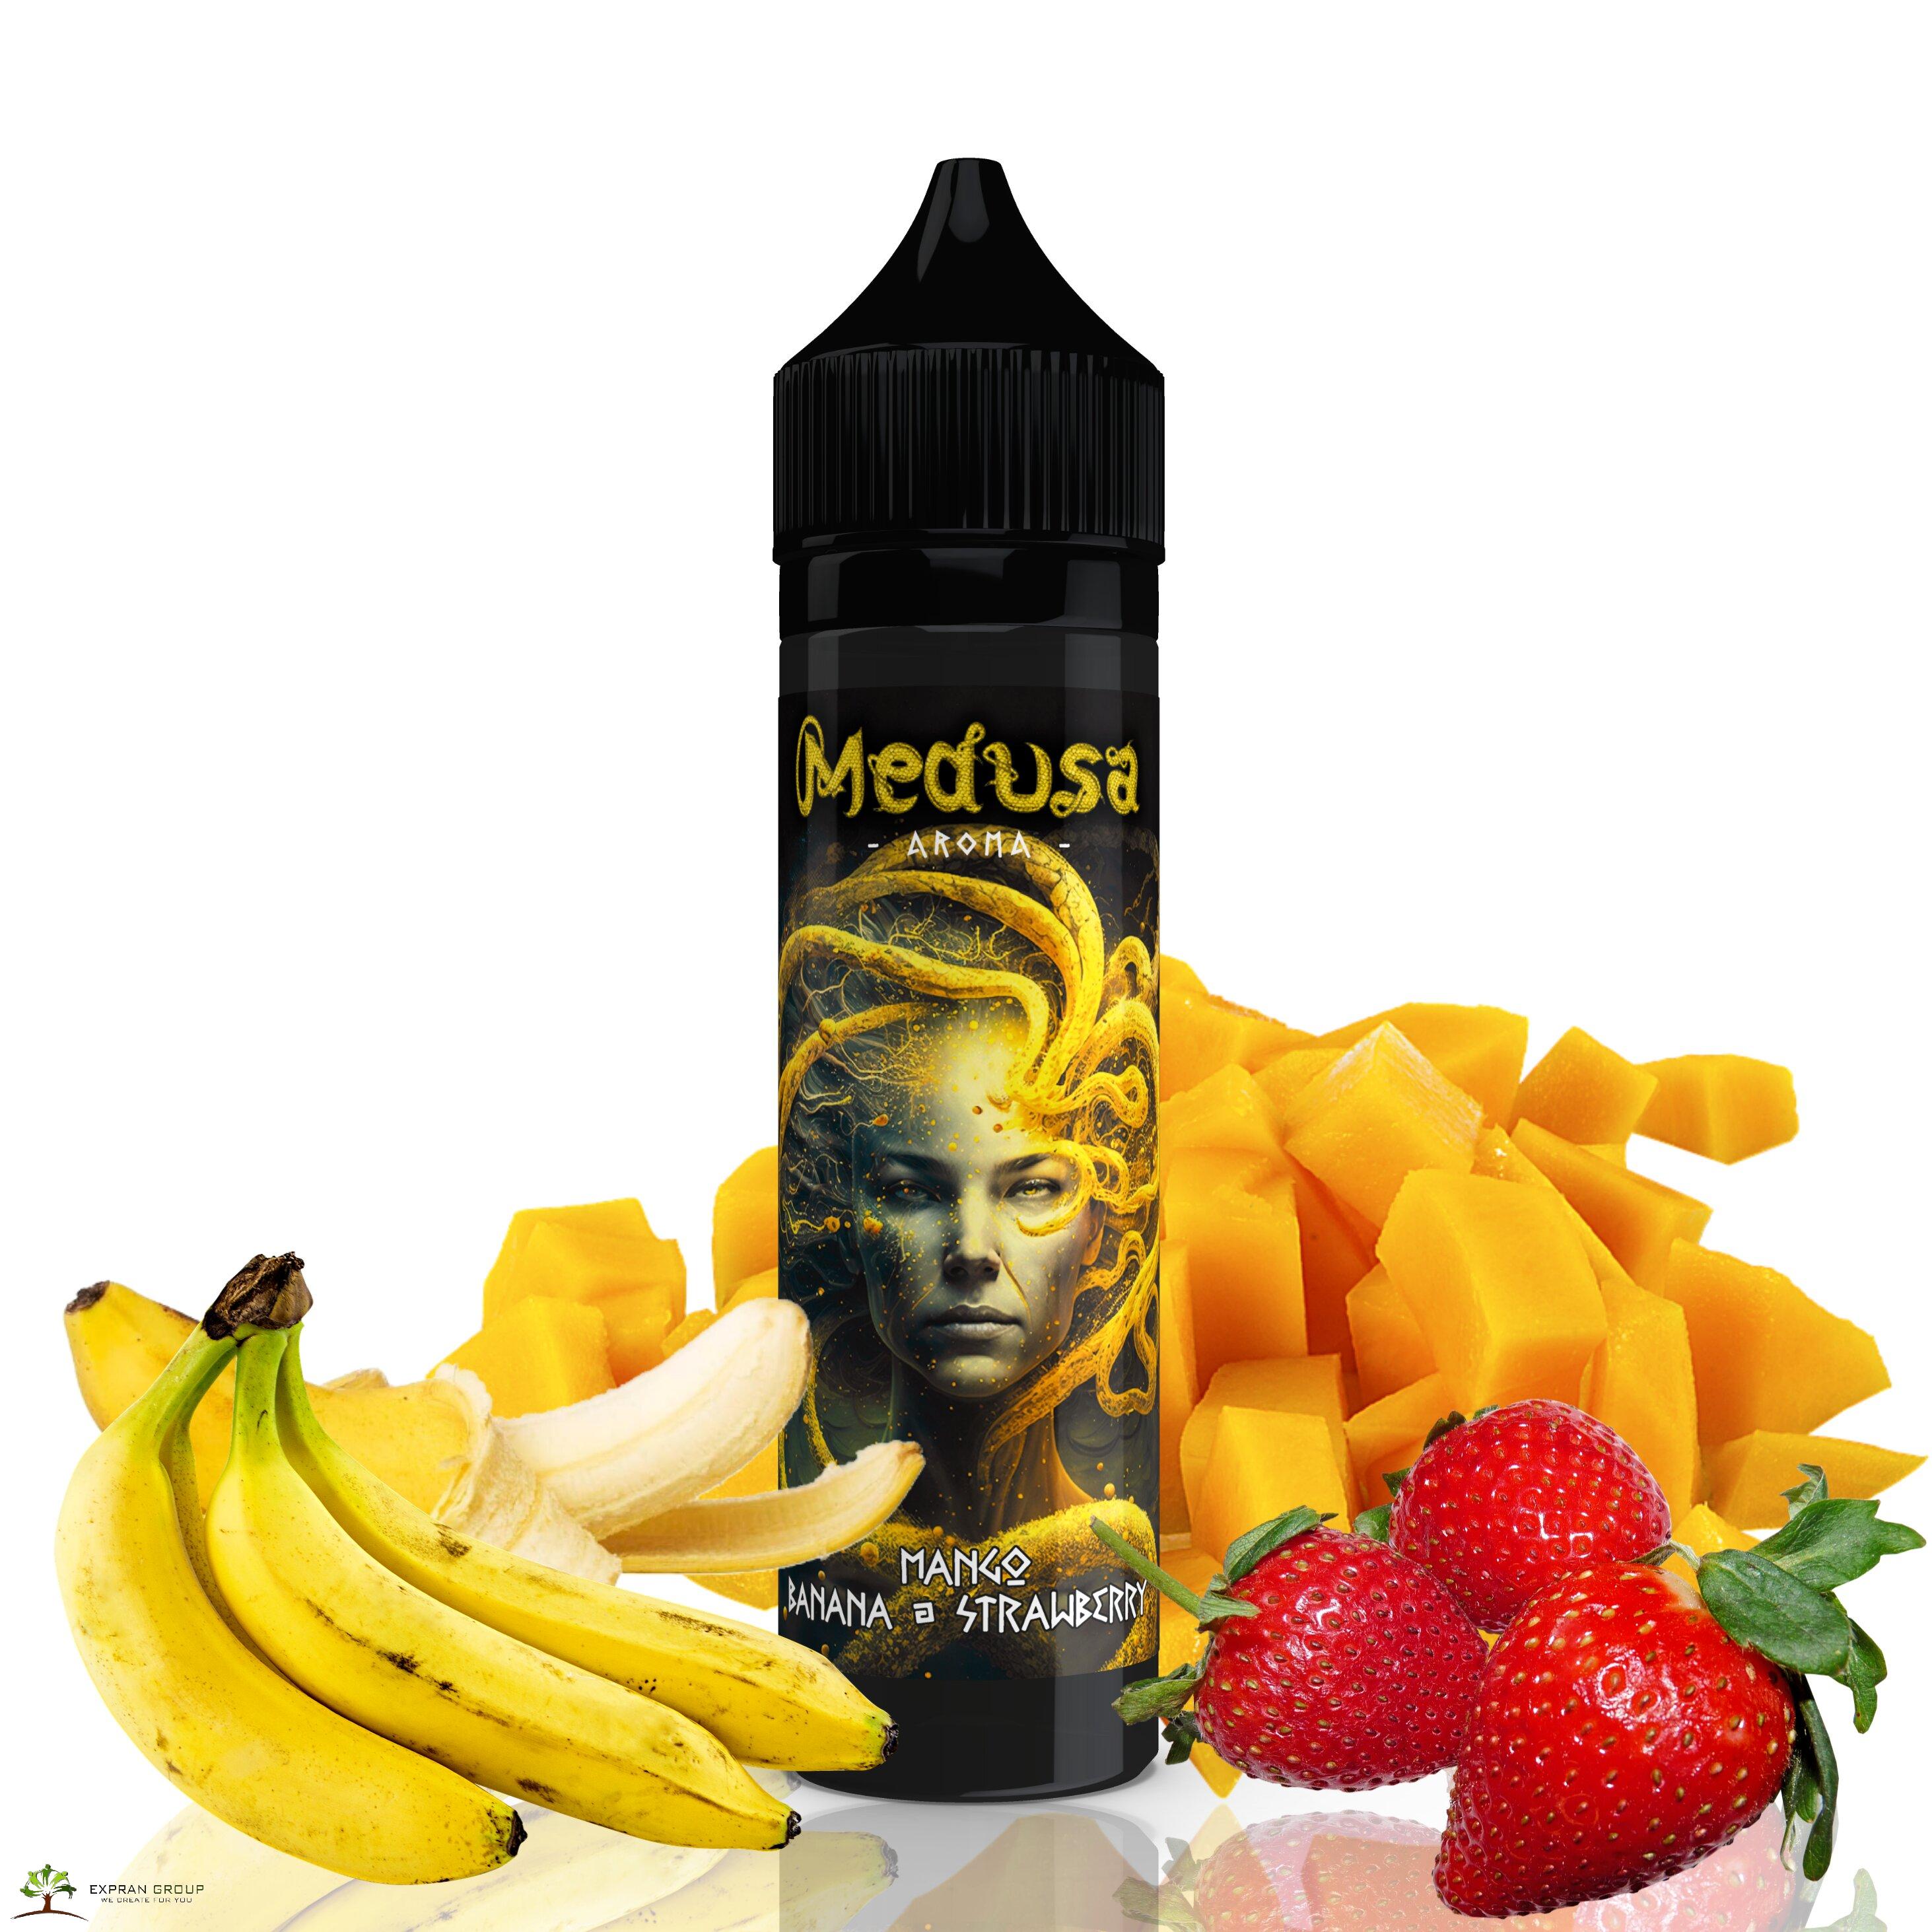 10 ml Medusa - Mango Banana Strawberry (Shake & Vape)